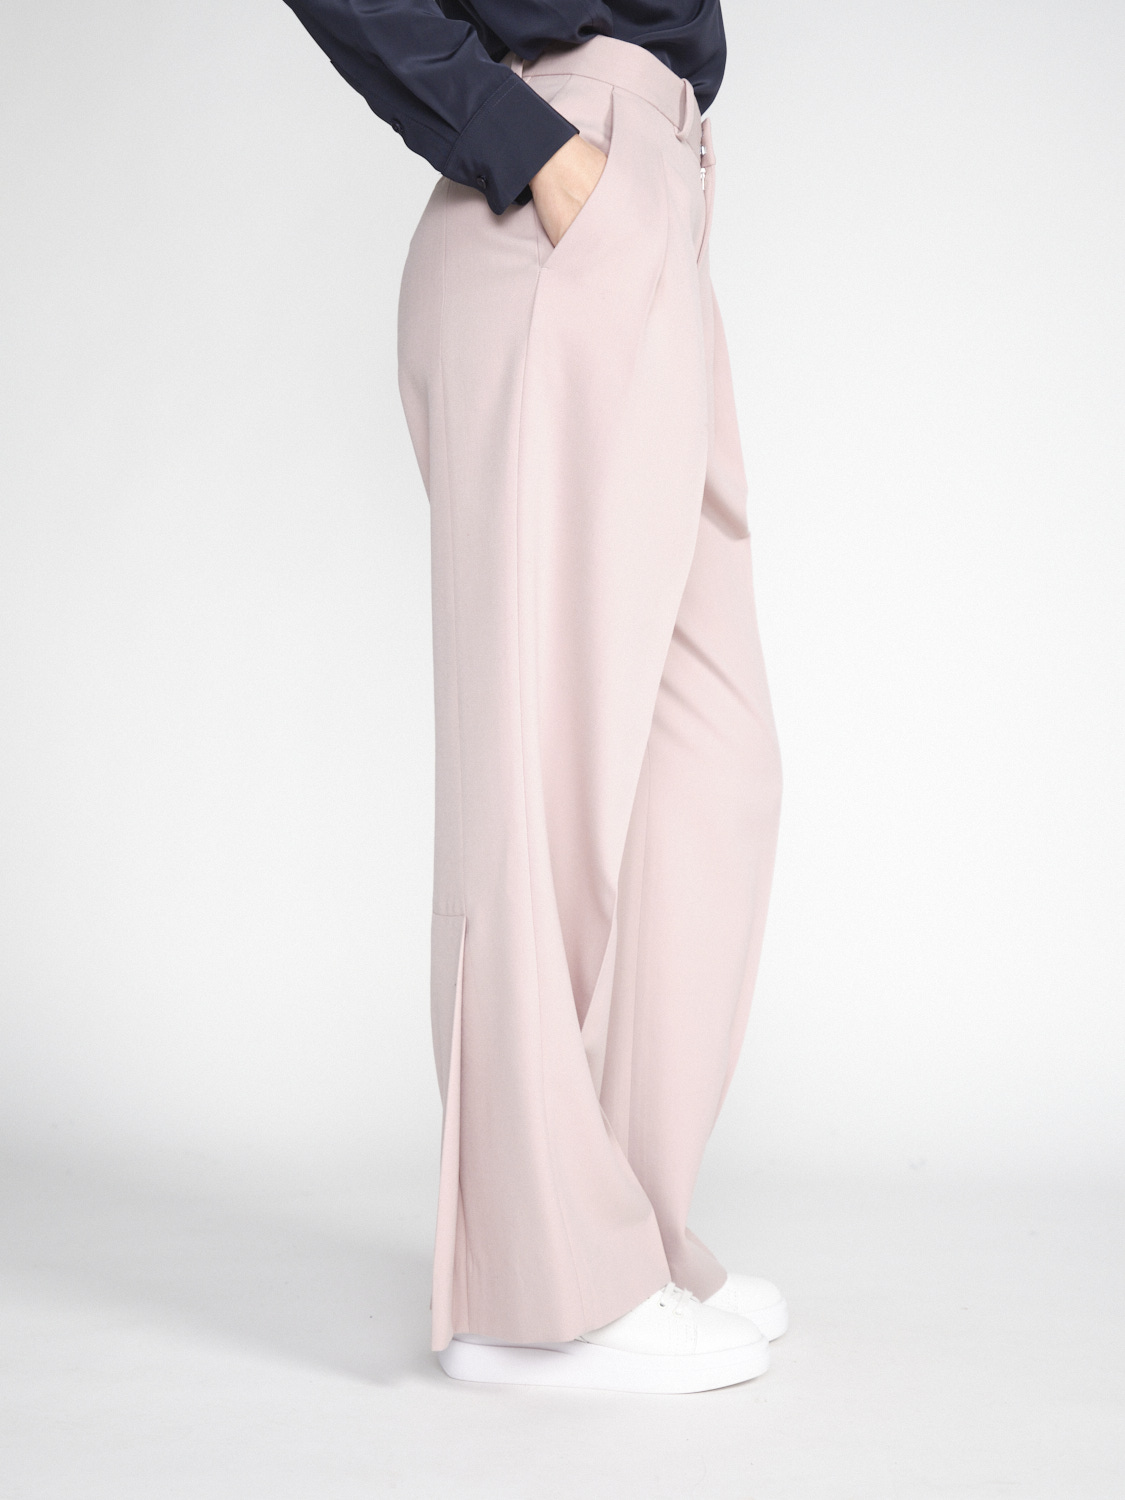 Victoria Beckham Double Pleat Trouser - Pantalón plisado en mezcla de lana virgen   rosa 34